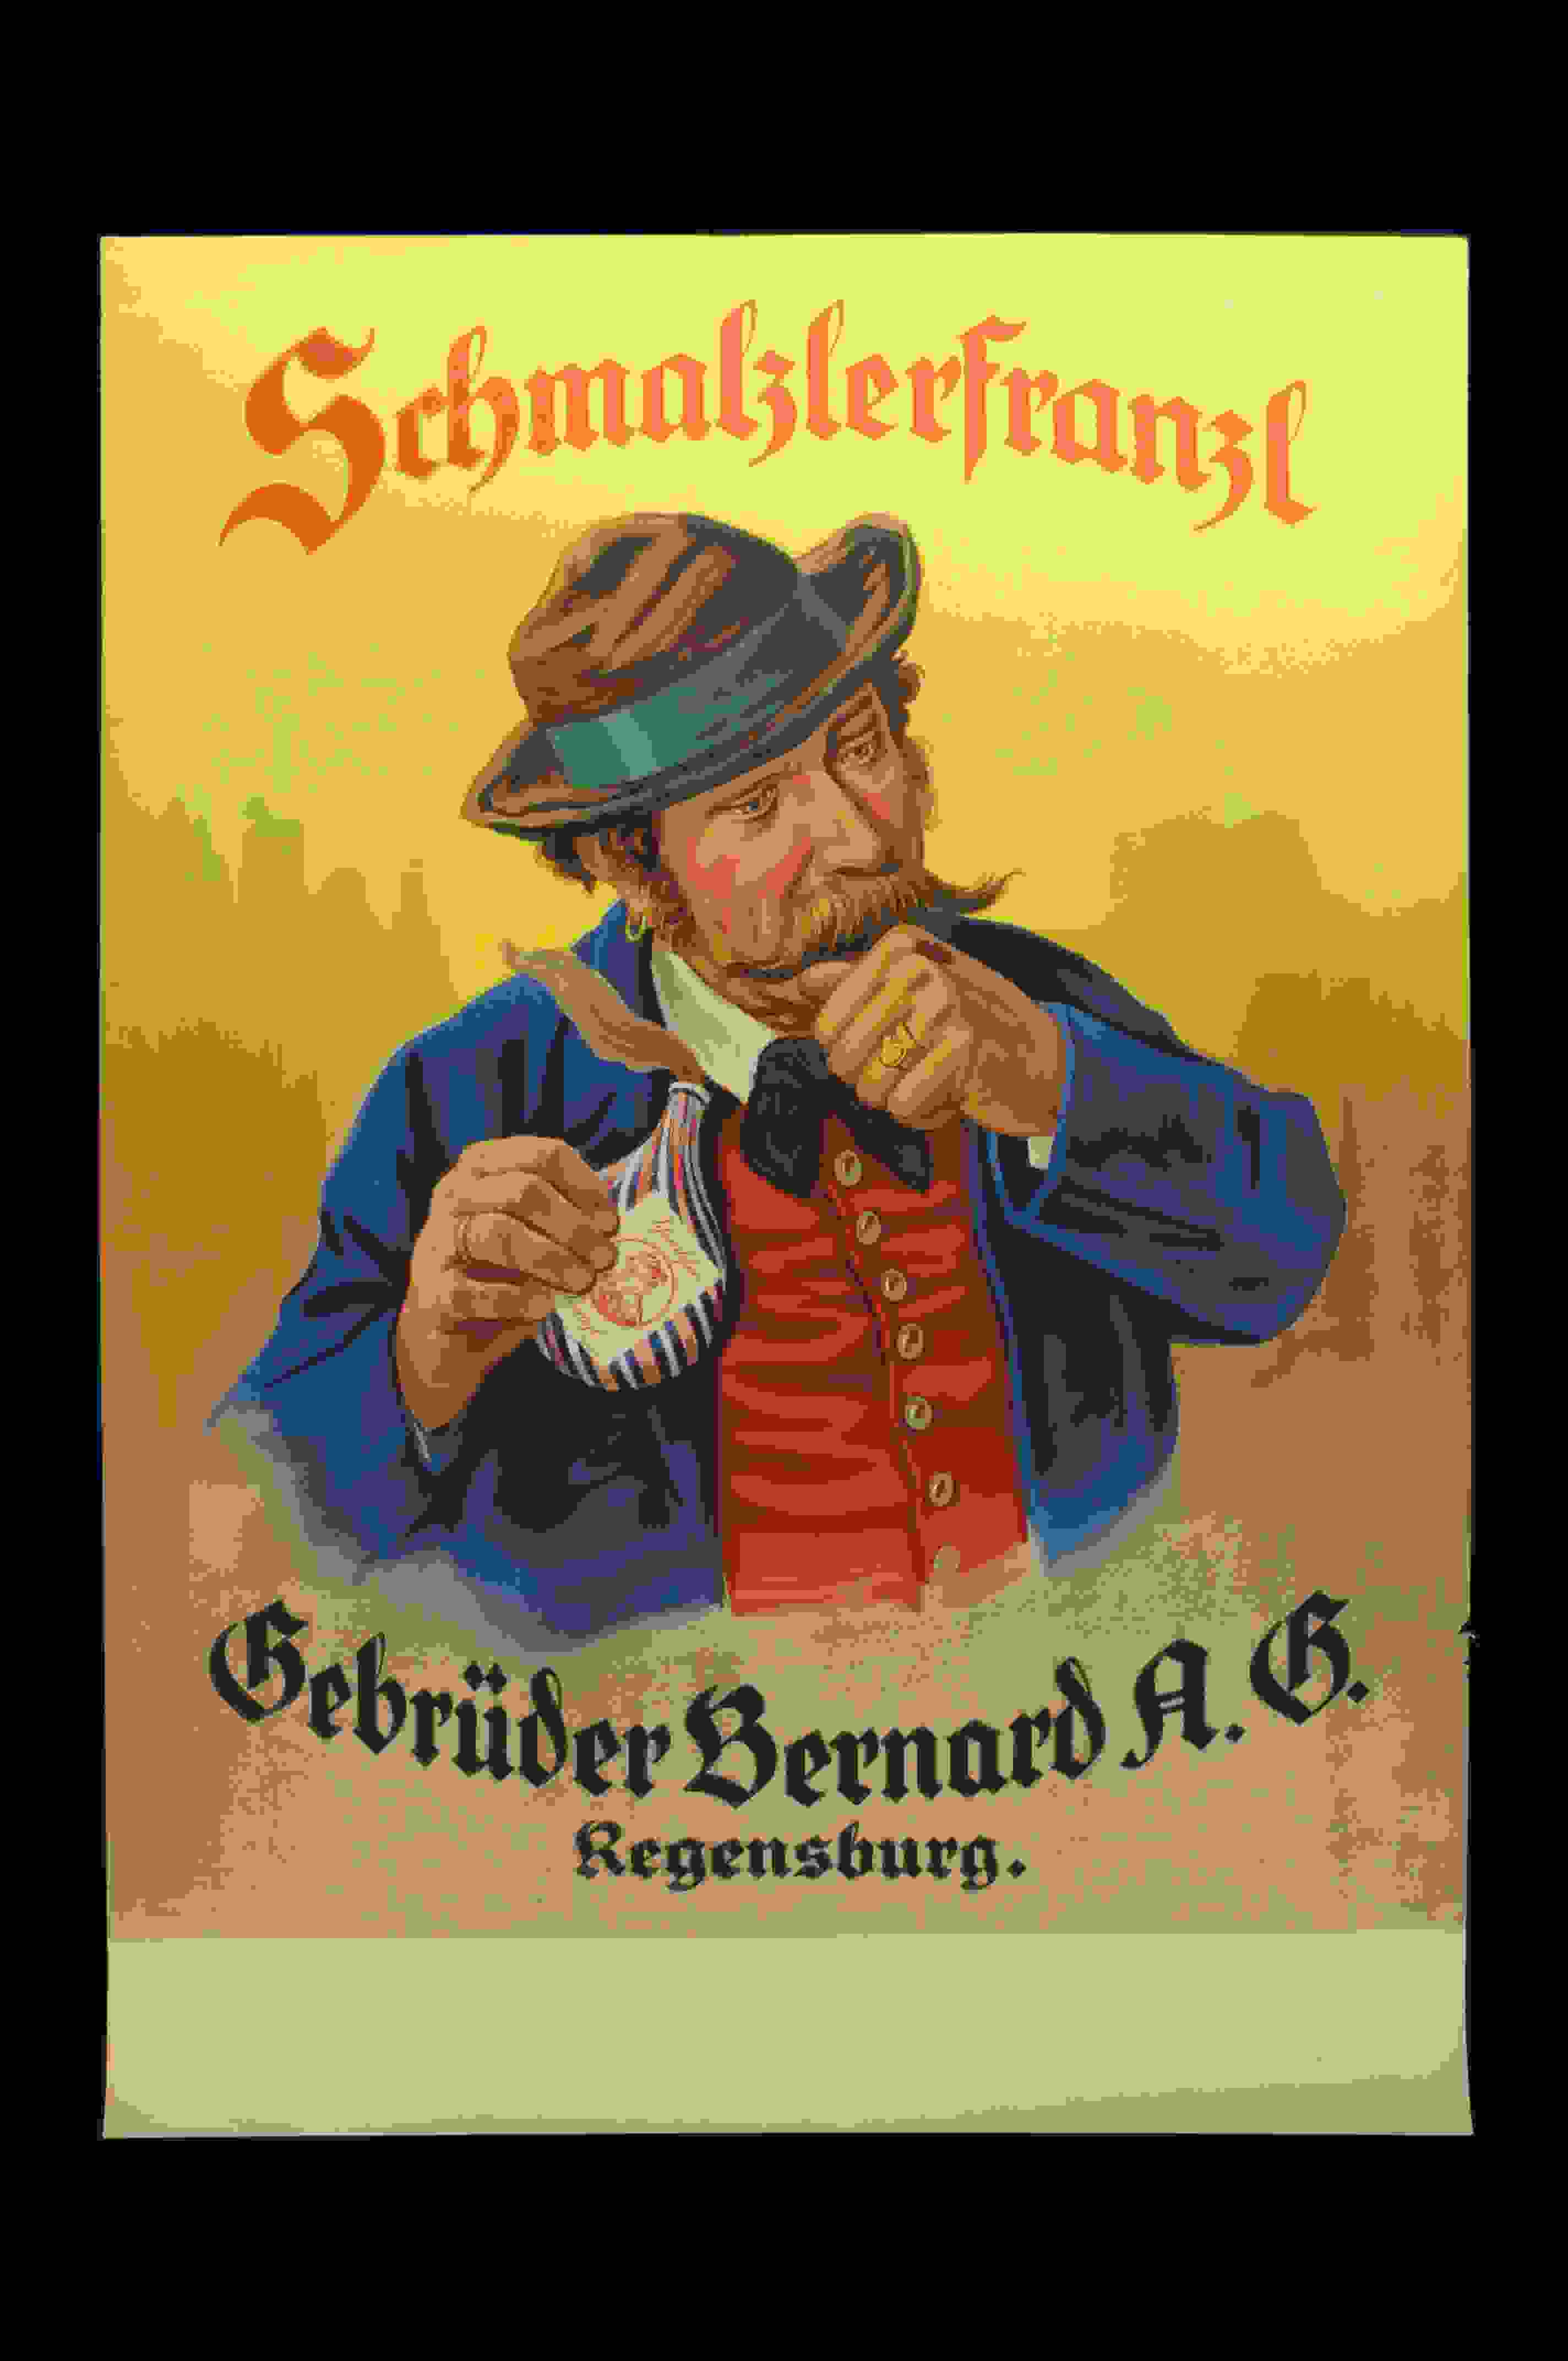 Schmalzlerfranzl Plakat 